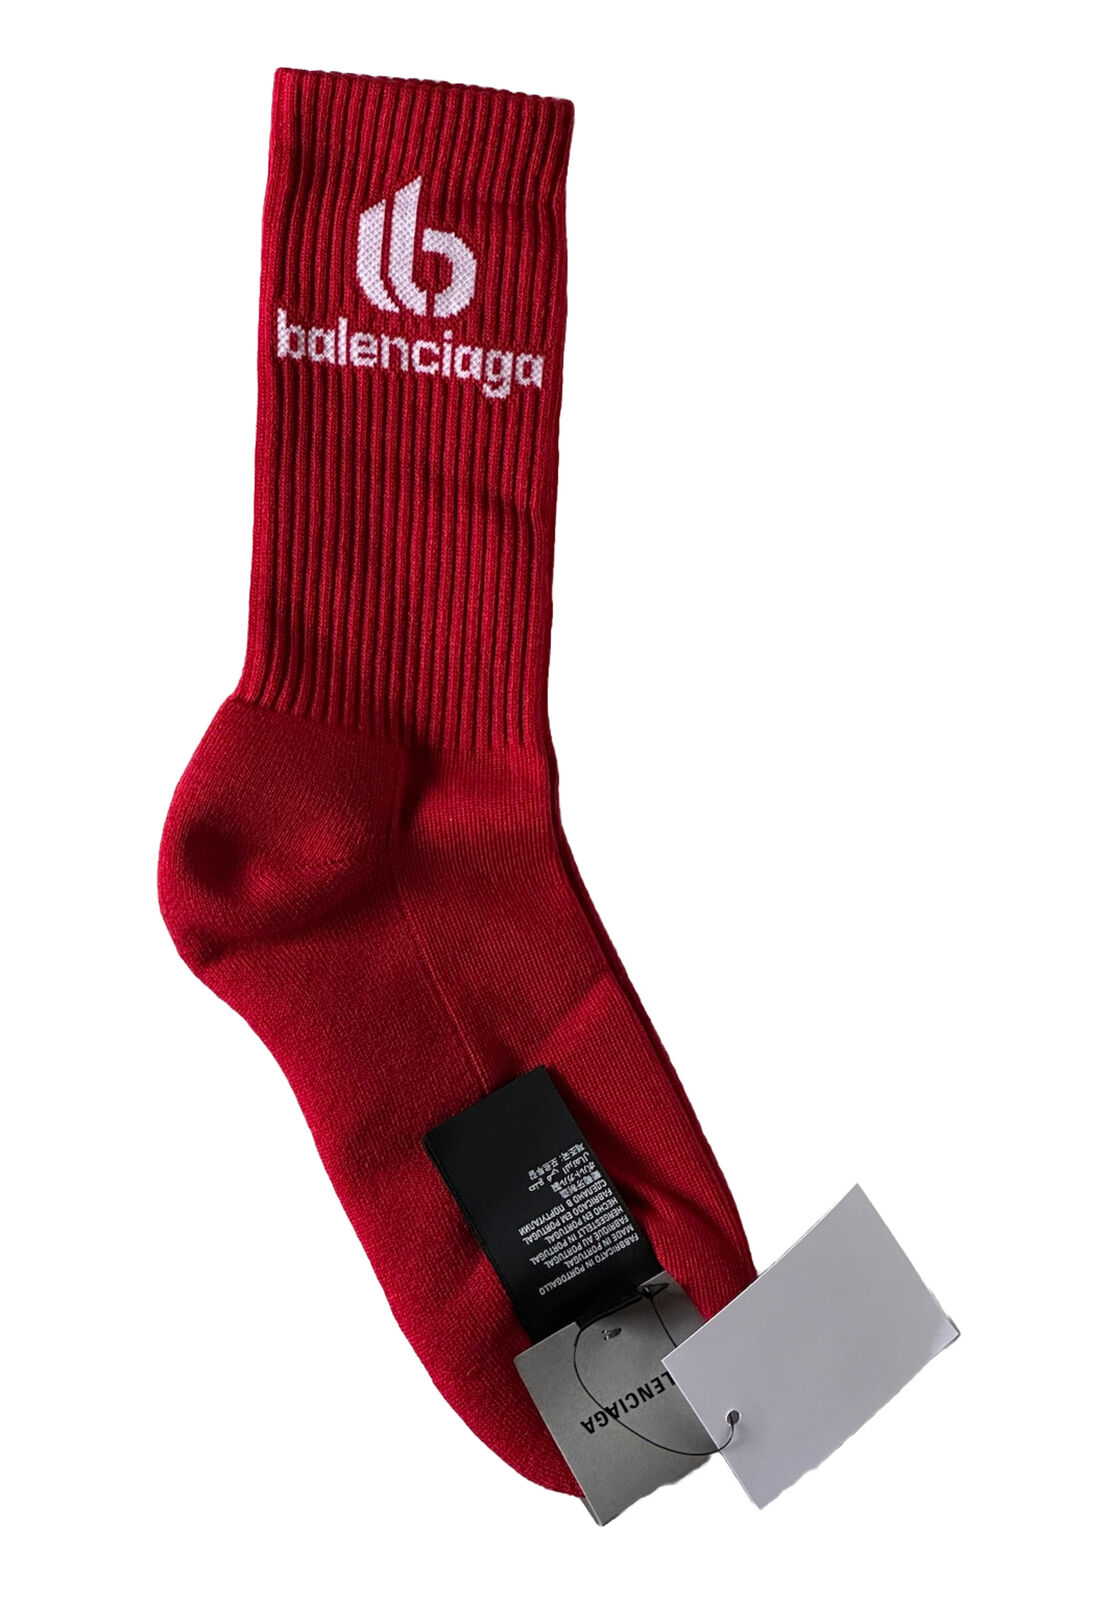 NWT $150 Balenciaga Logo Tennis Socks Red Large (12) Made in Portugal